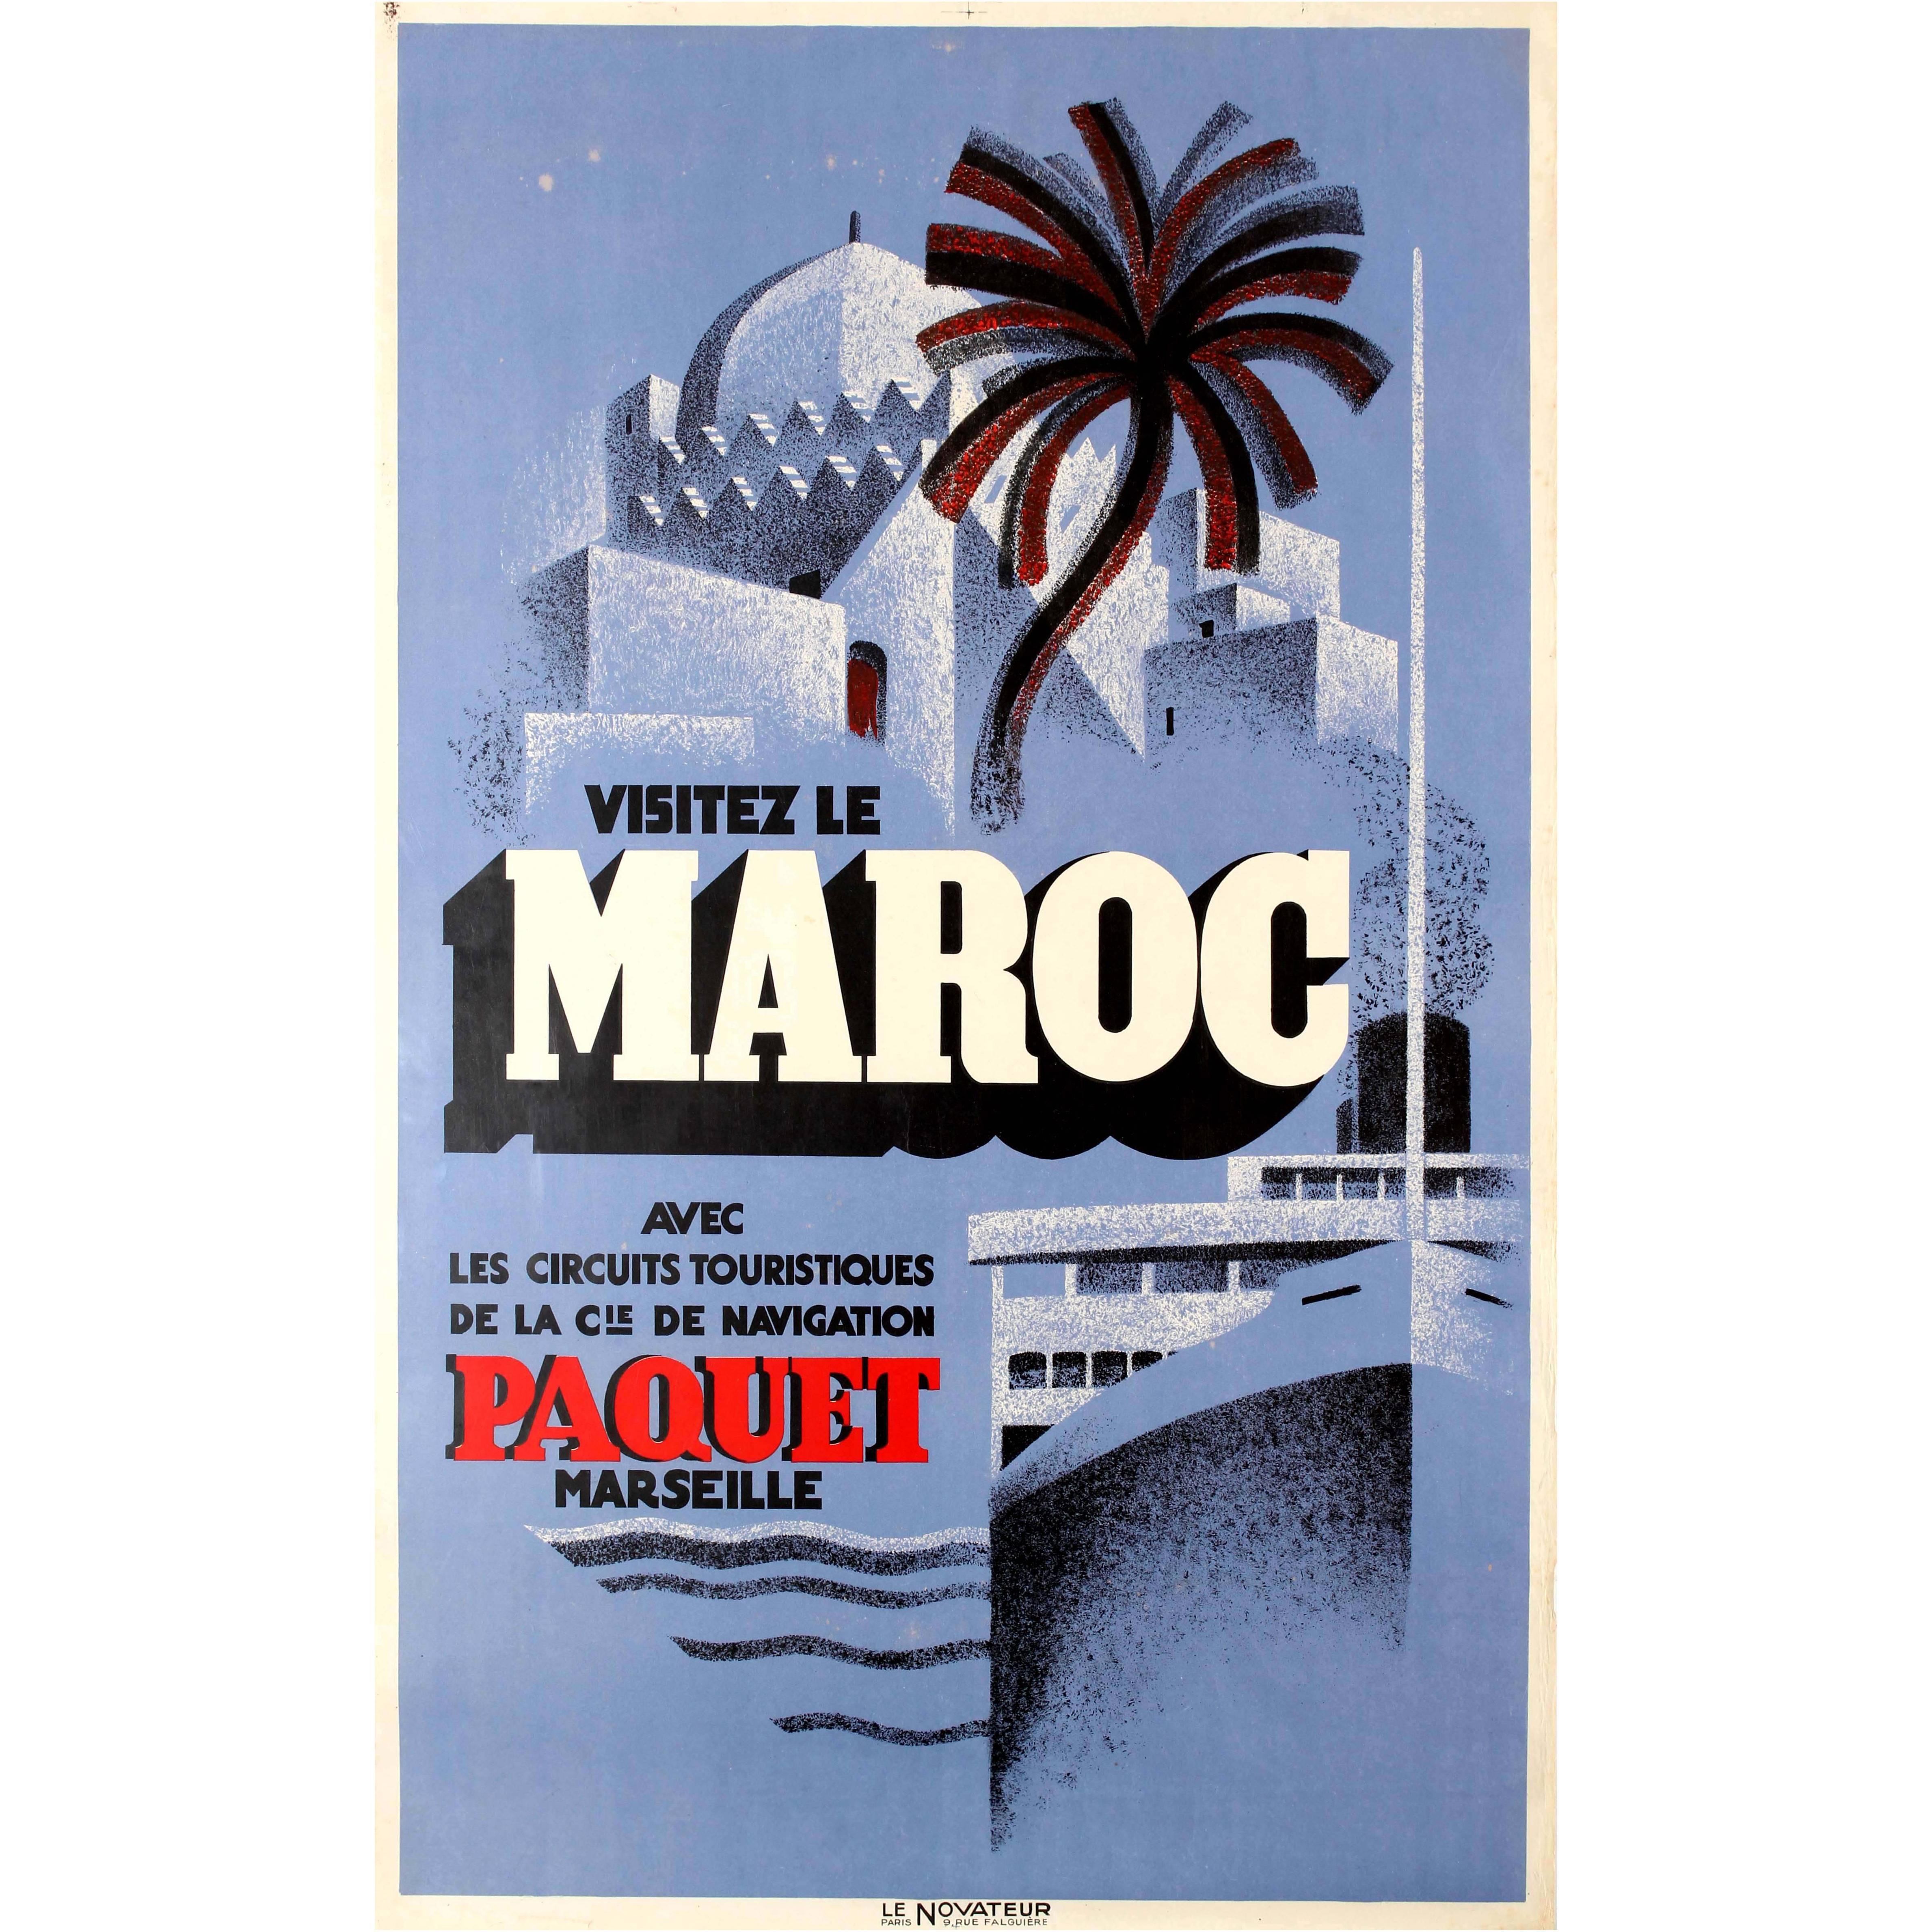 Original Vintage Travel Poster Advertising Paquet Shipping Tours - Visit Morocco